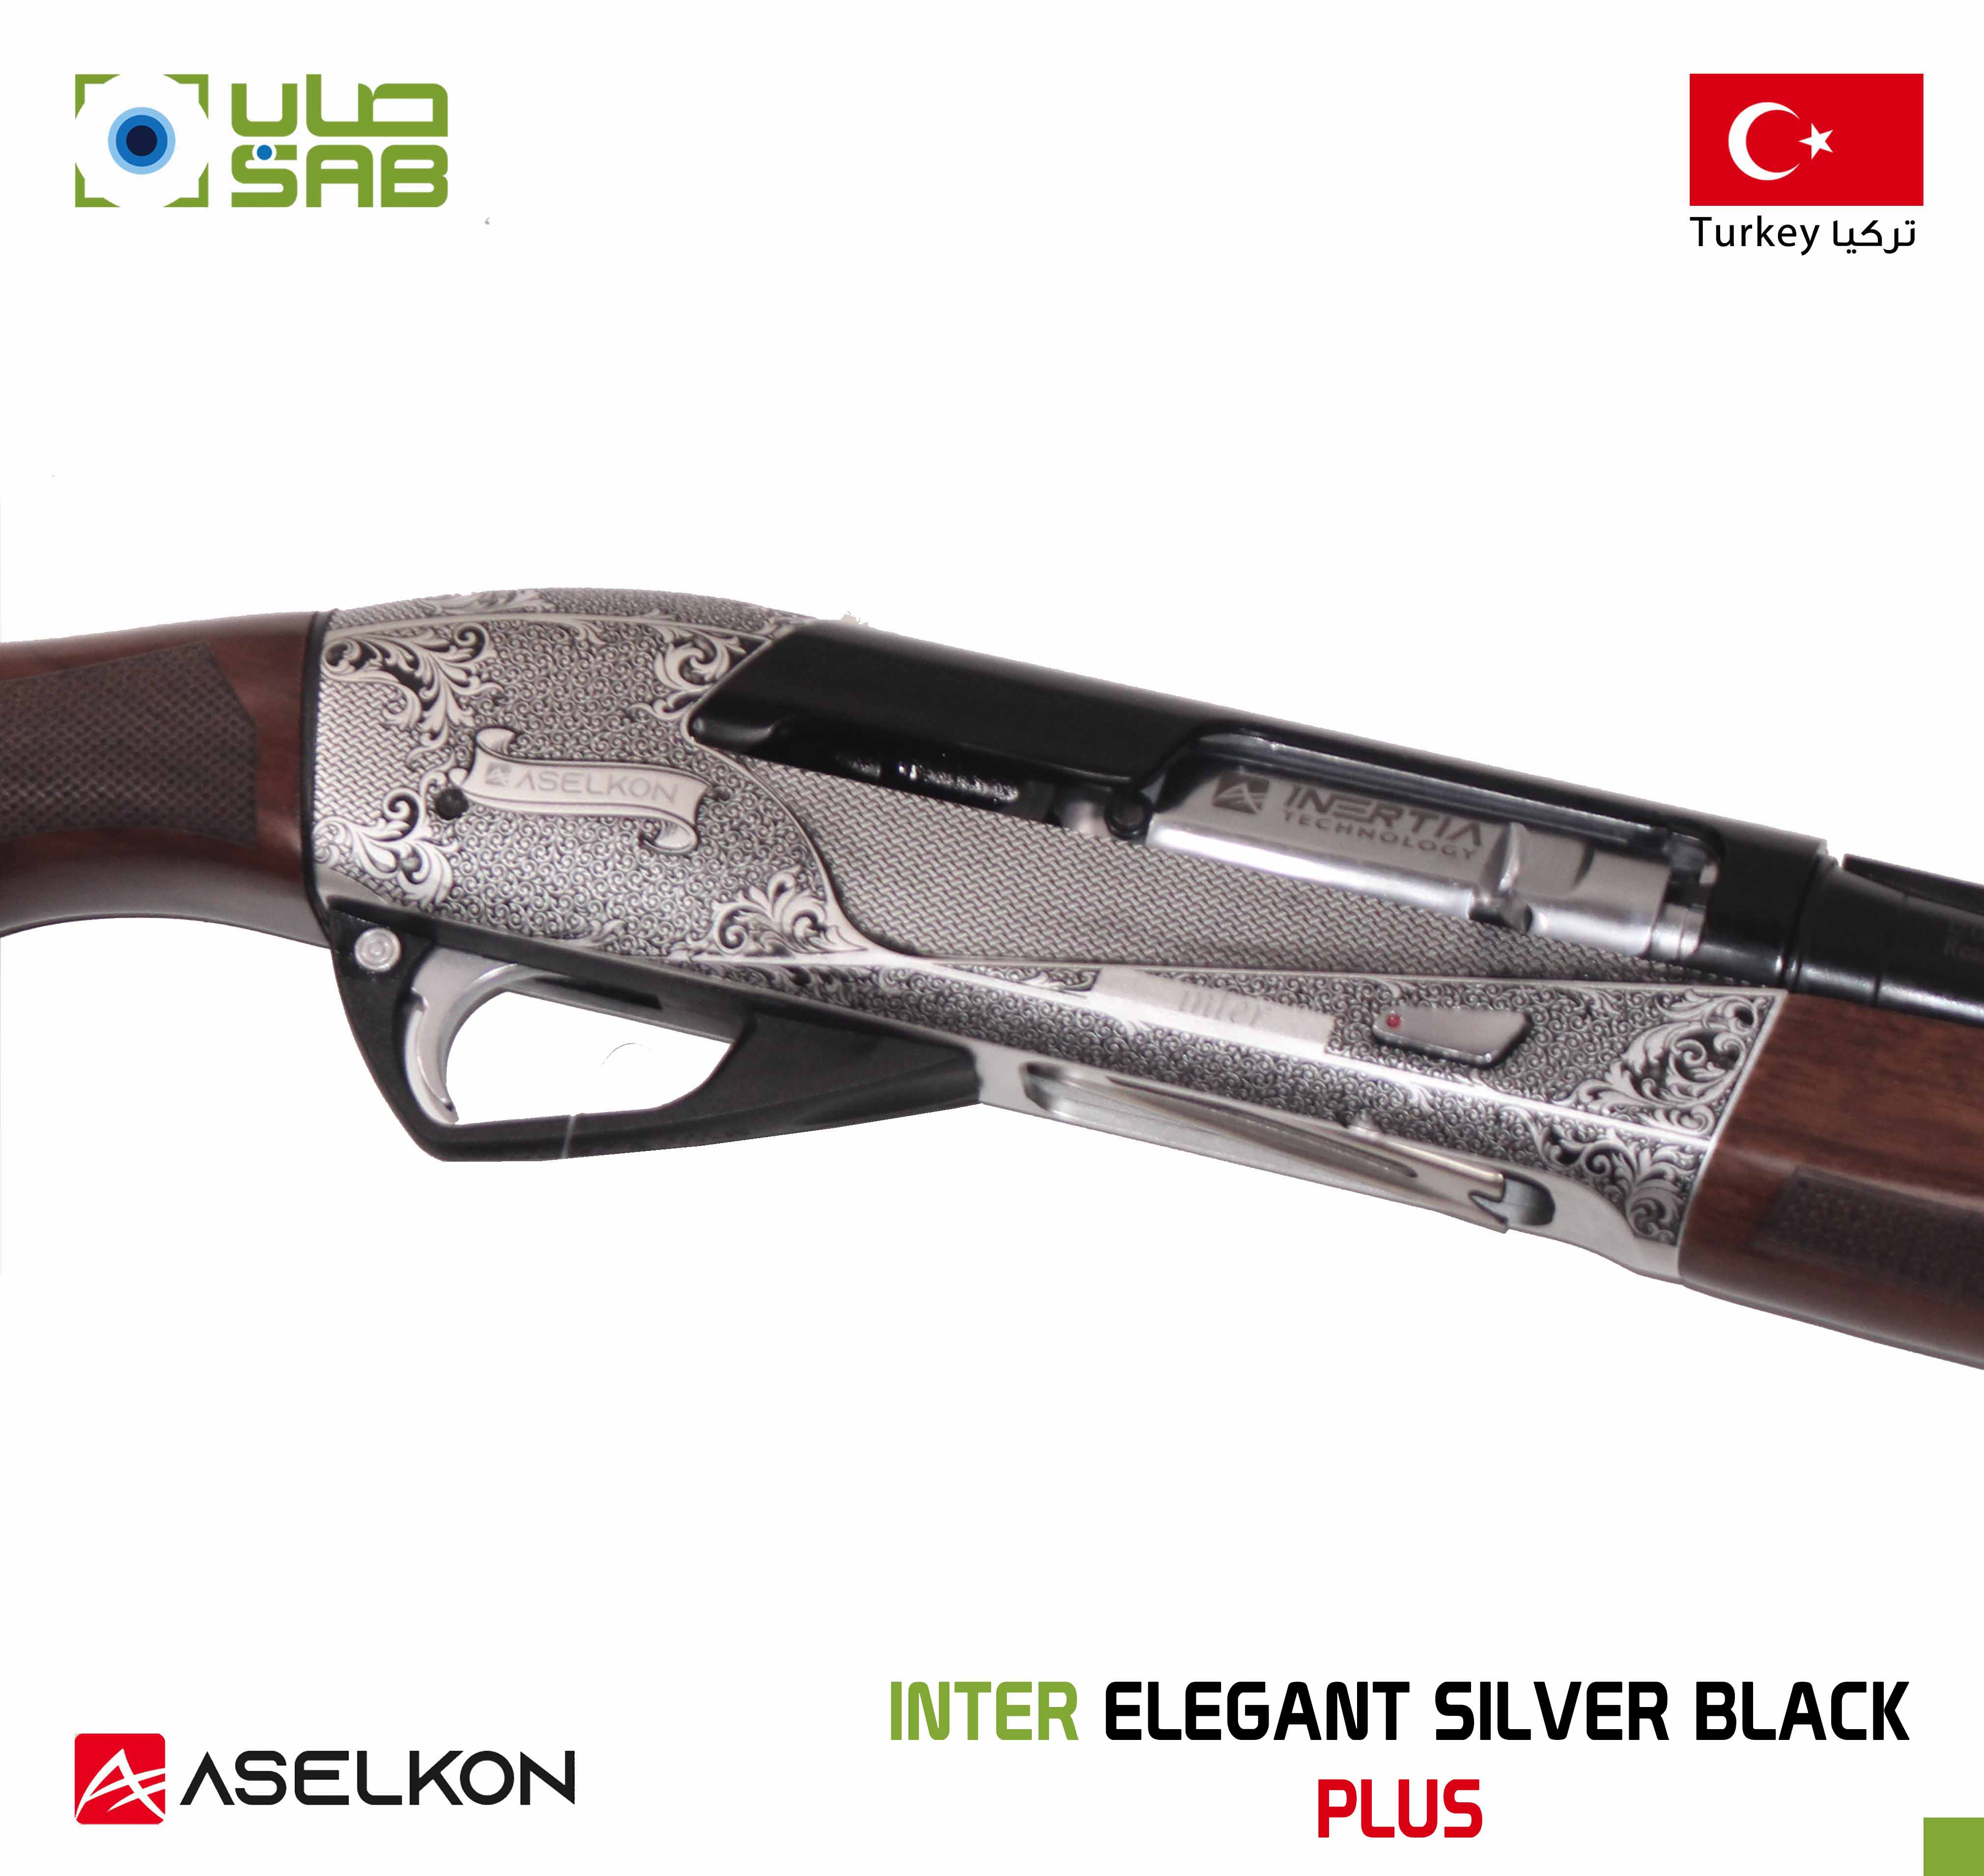 12 G - Aselkon - "Extended Mag" 32" INTER ELEGANT SILVER BLACK  WOOD